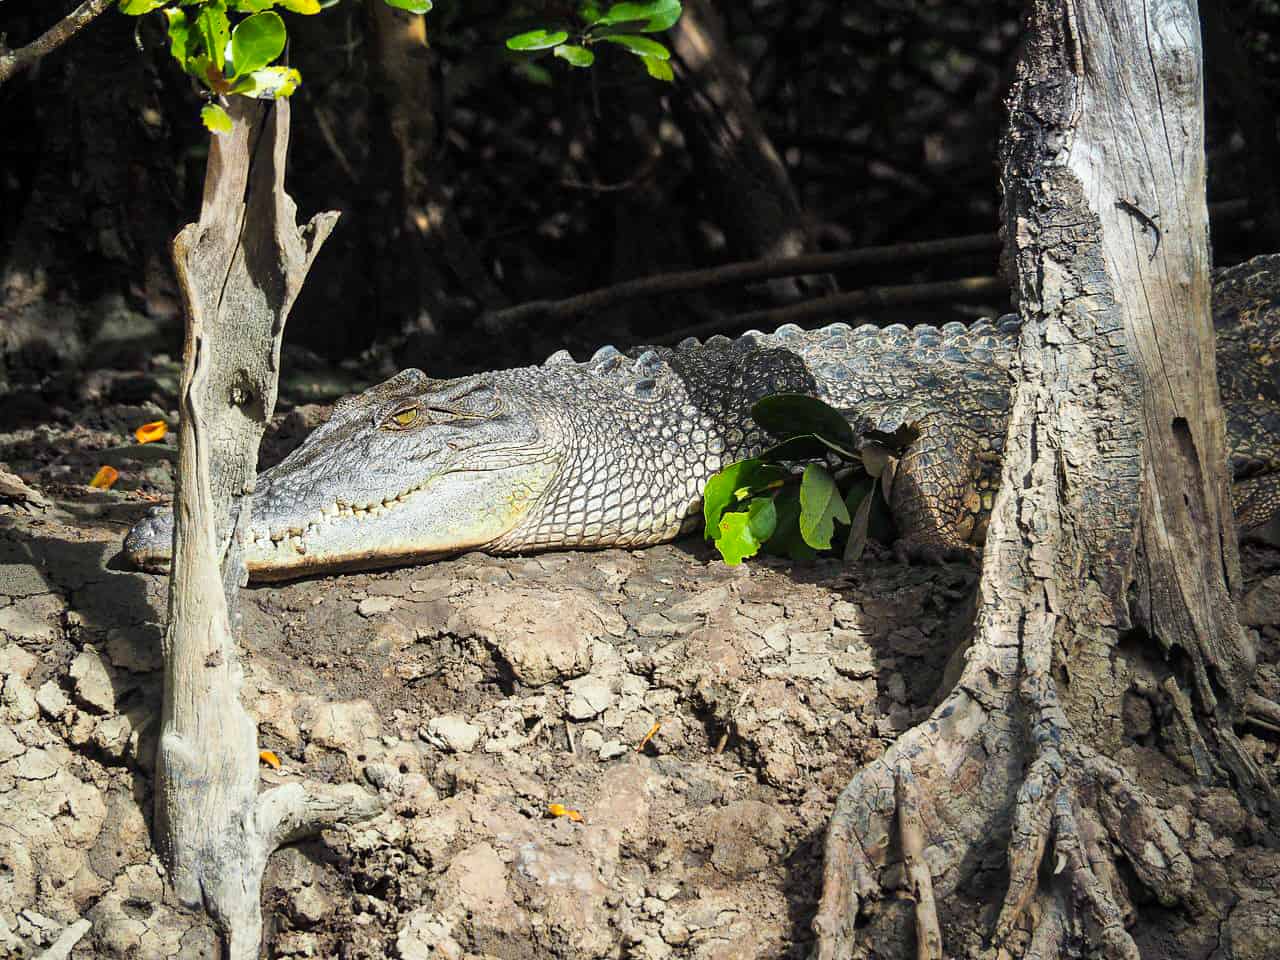 A crocodile at Dickinsons Inlet in Port Douglas, Australia // Travel Mermaid